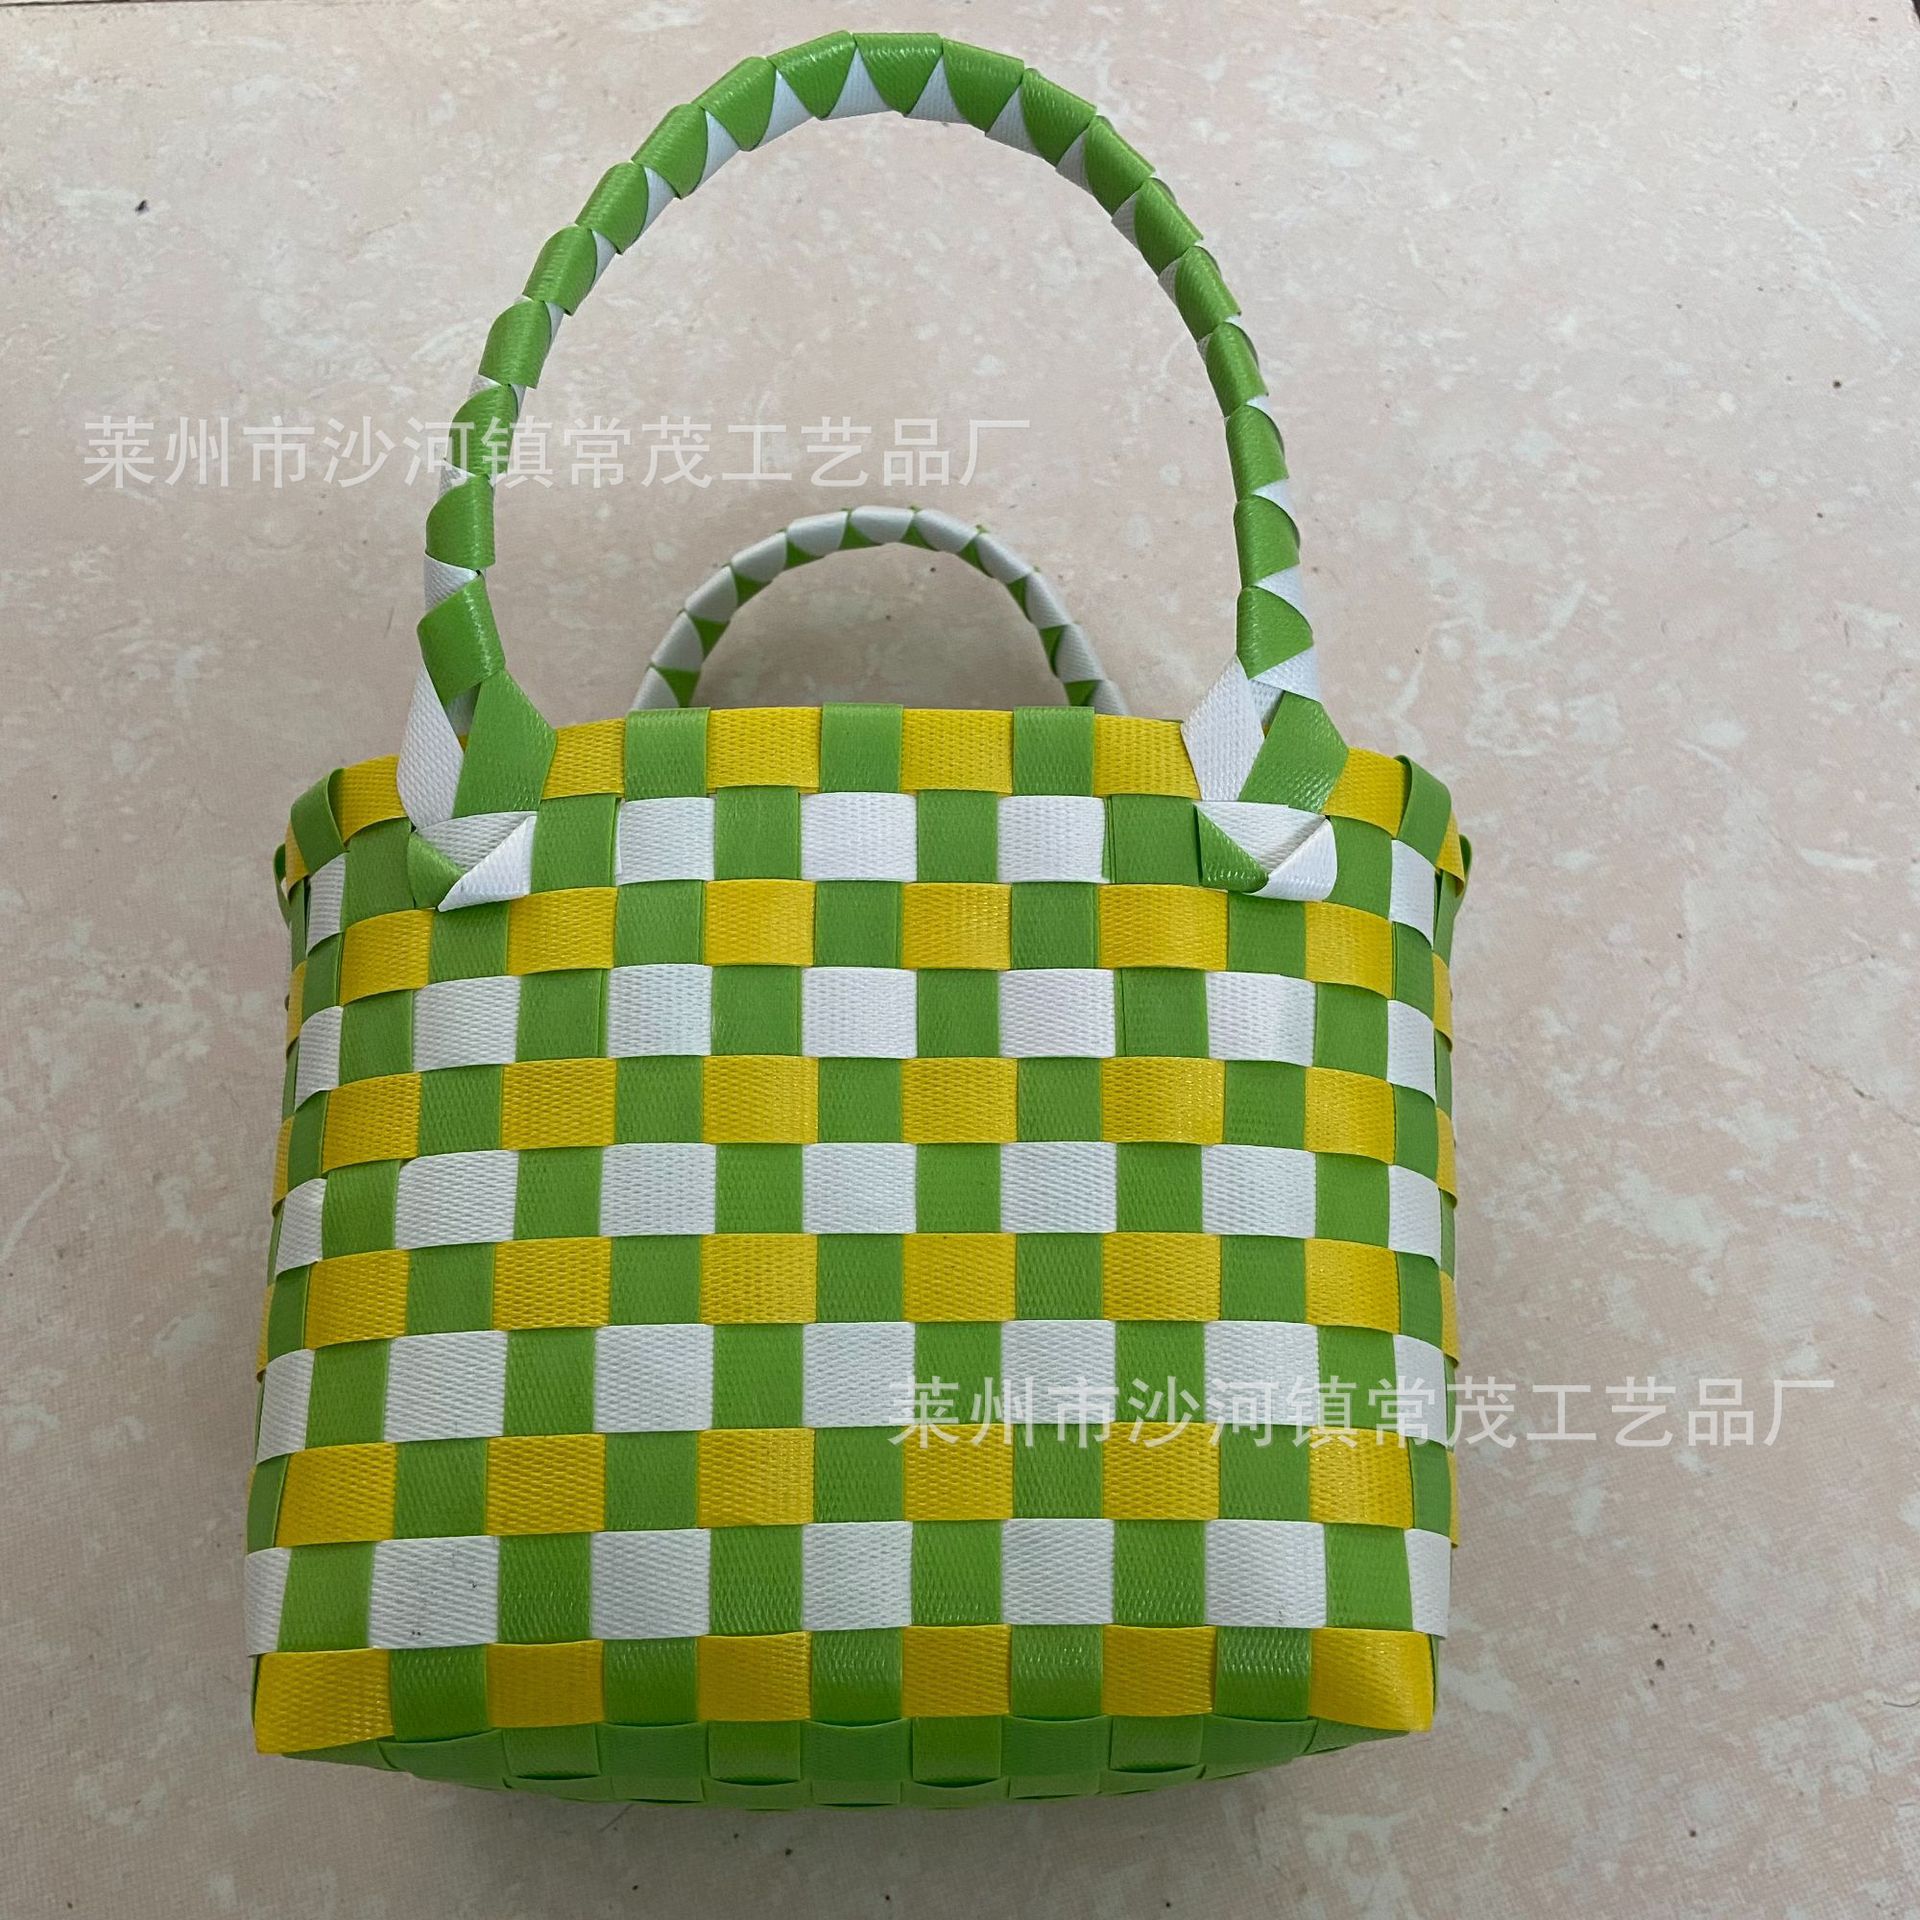 Handmade Plastic Woven Bag Women's Small Square Bag Multi-Color Optional Hand-Carrying Vegetable Basket Children's Vegetable Basket Quantity Discount